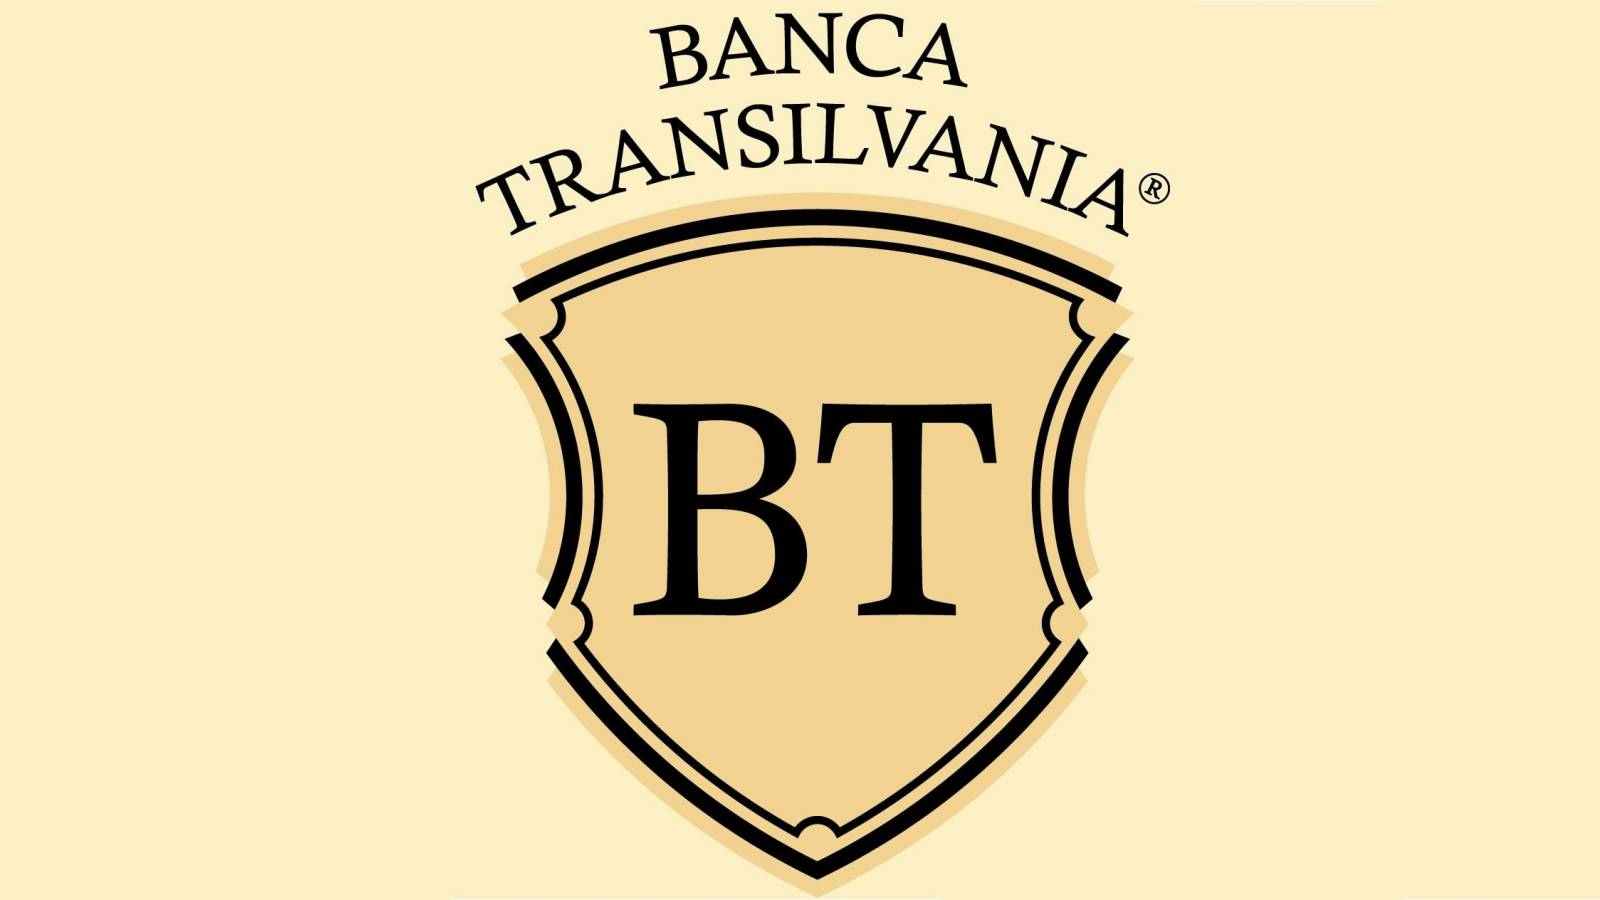 BANCA Transilvania kvittering